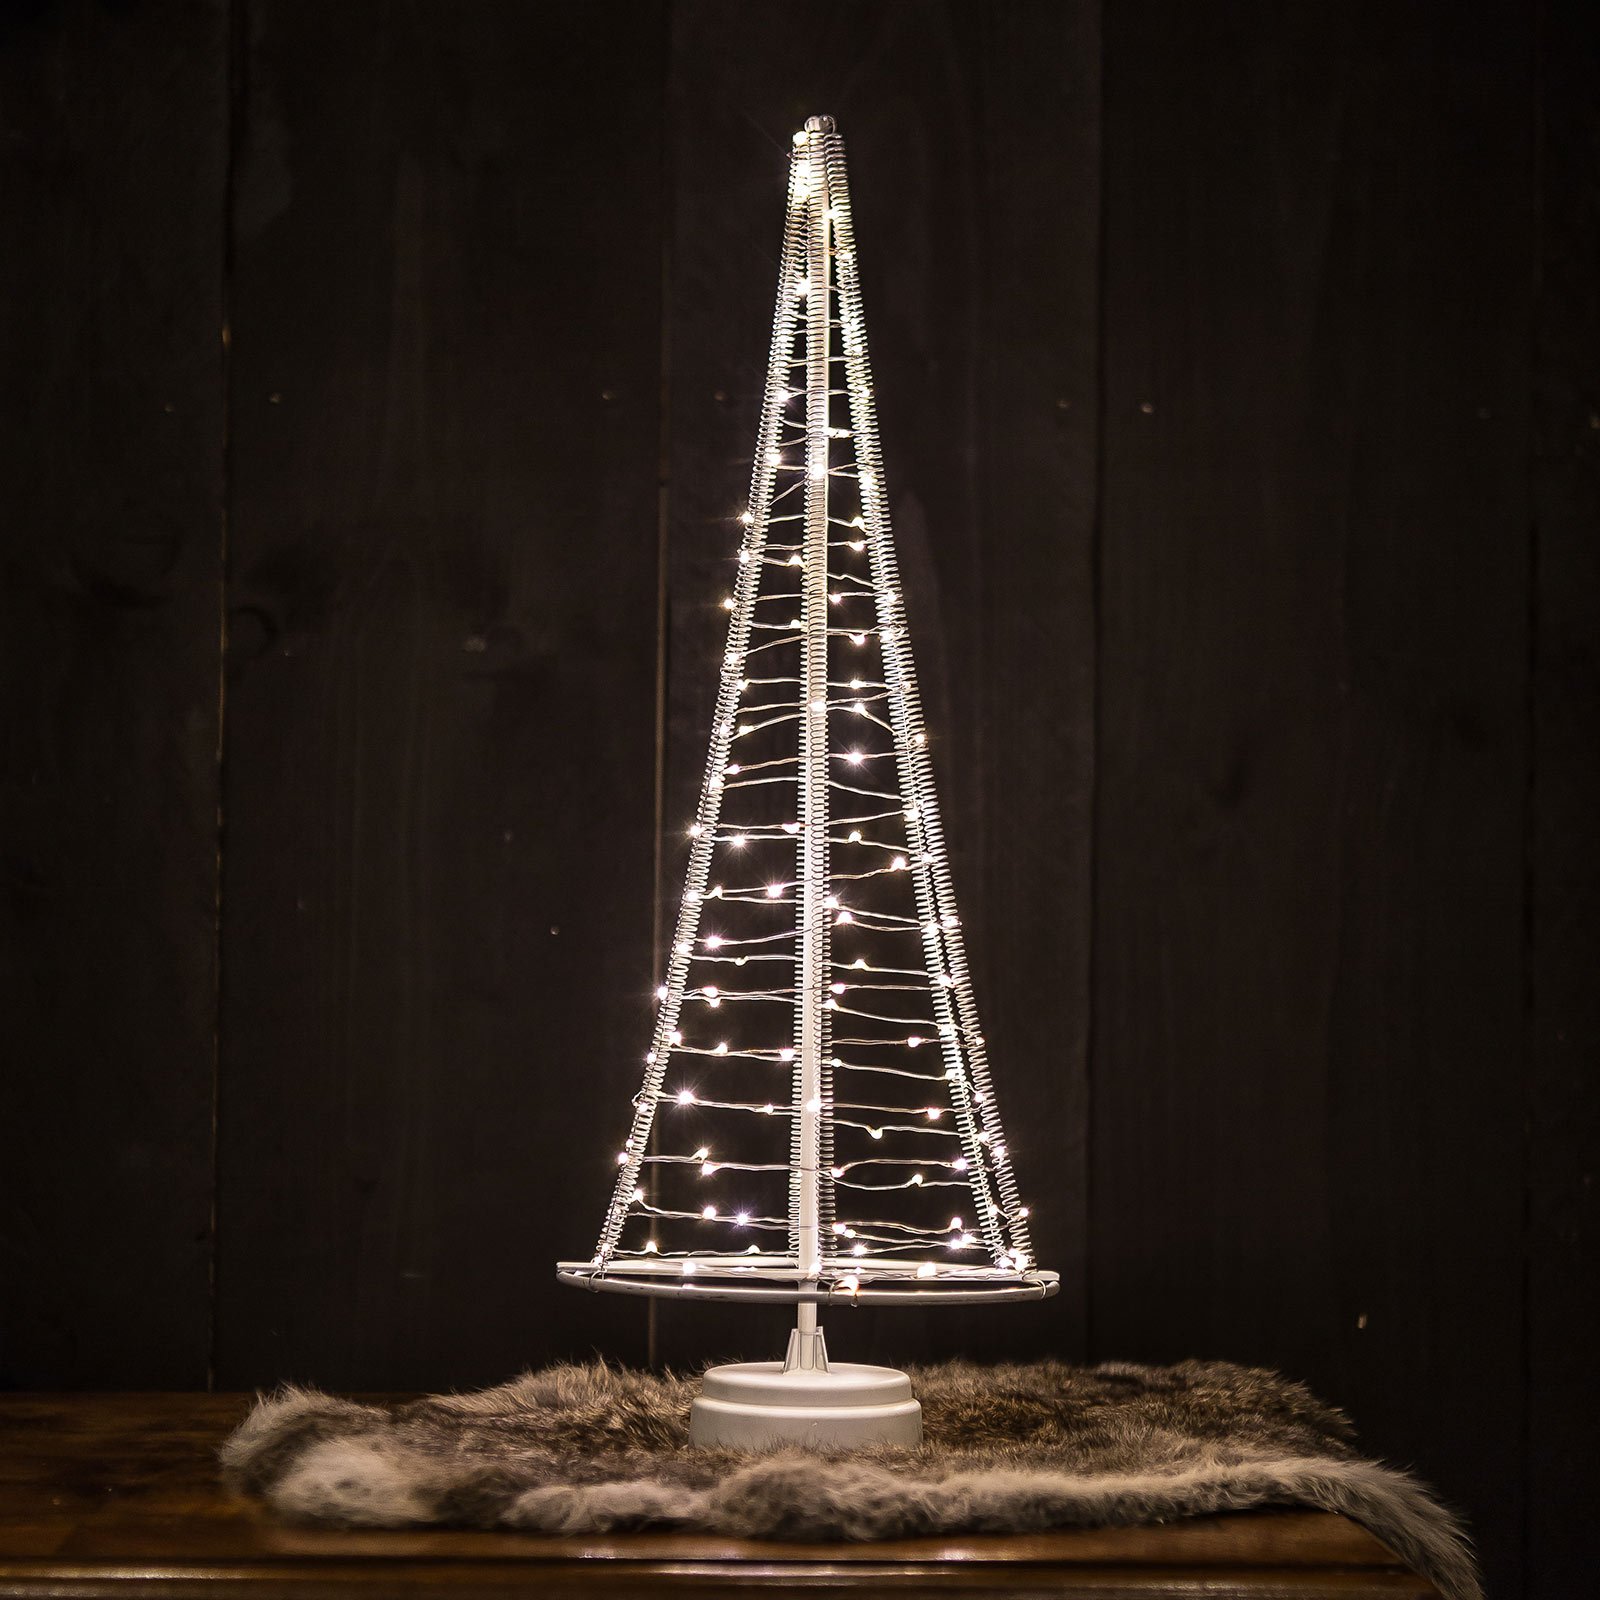 Santa’s Tree, silver wire, height 51 cm